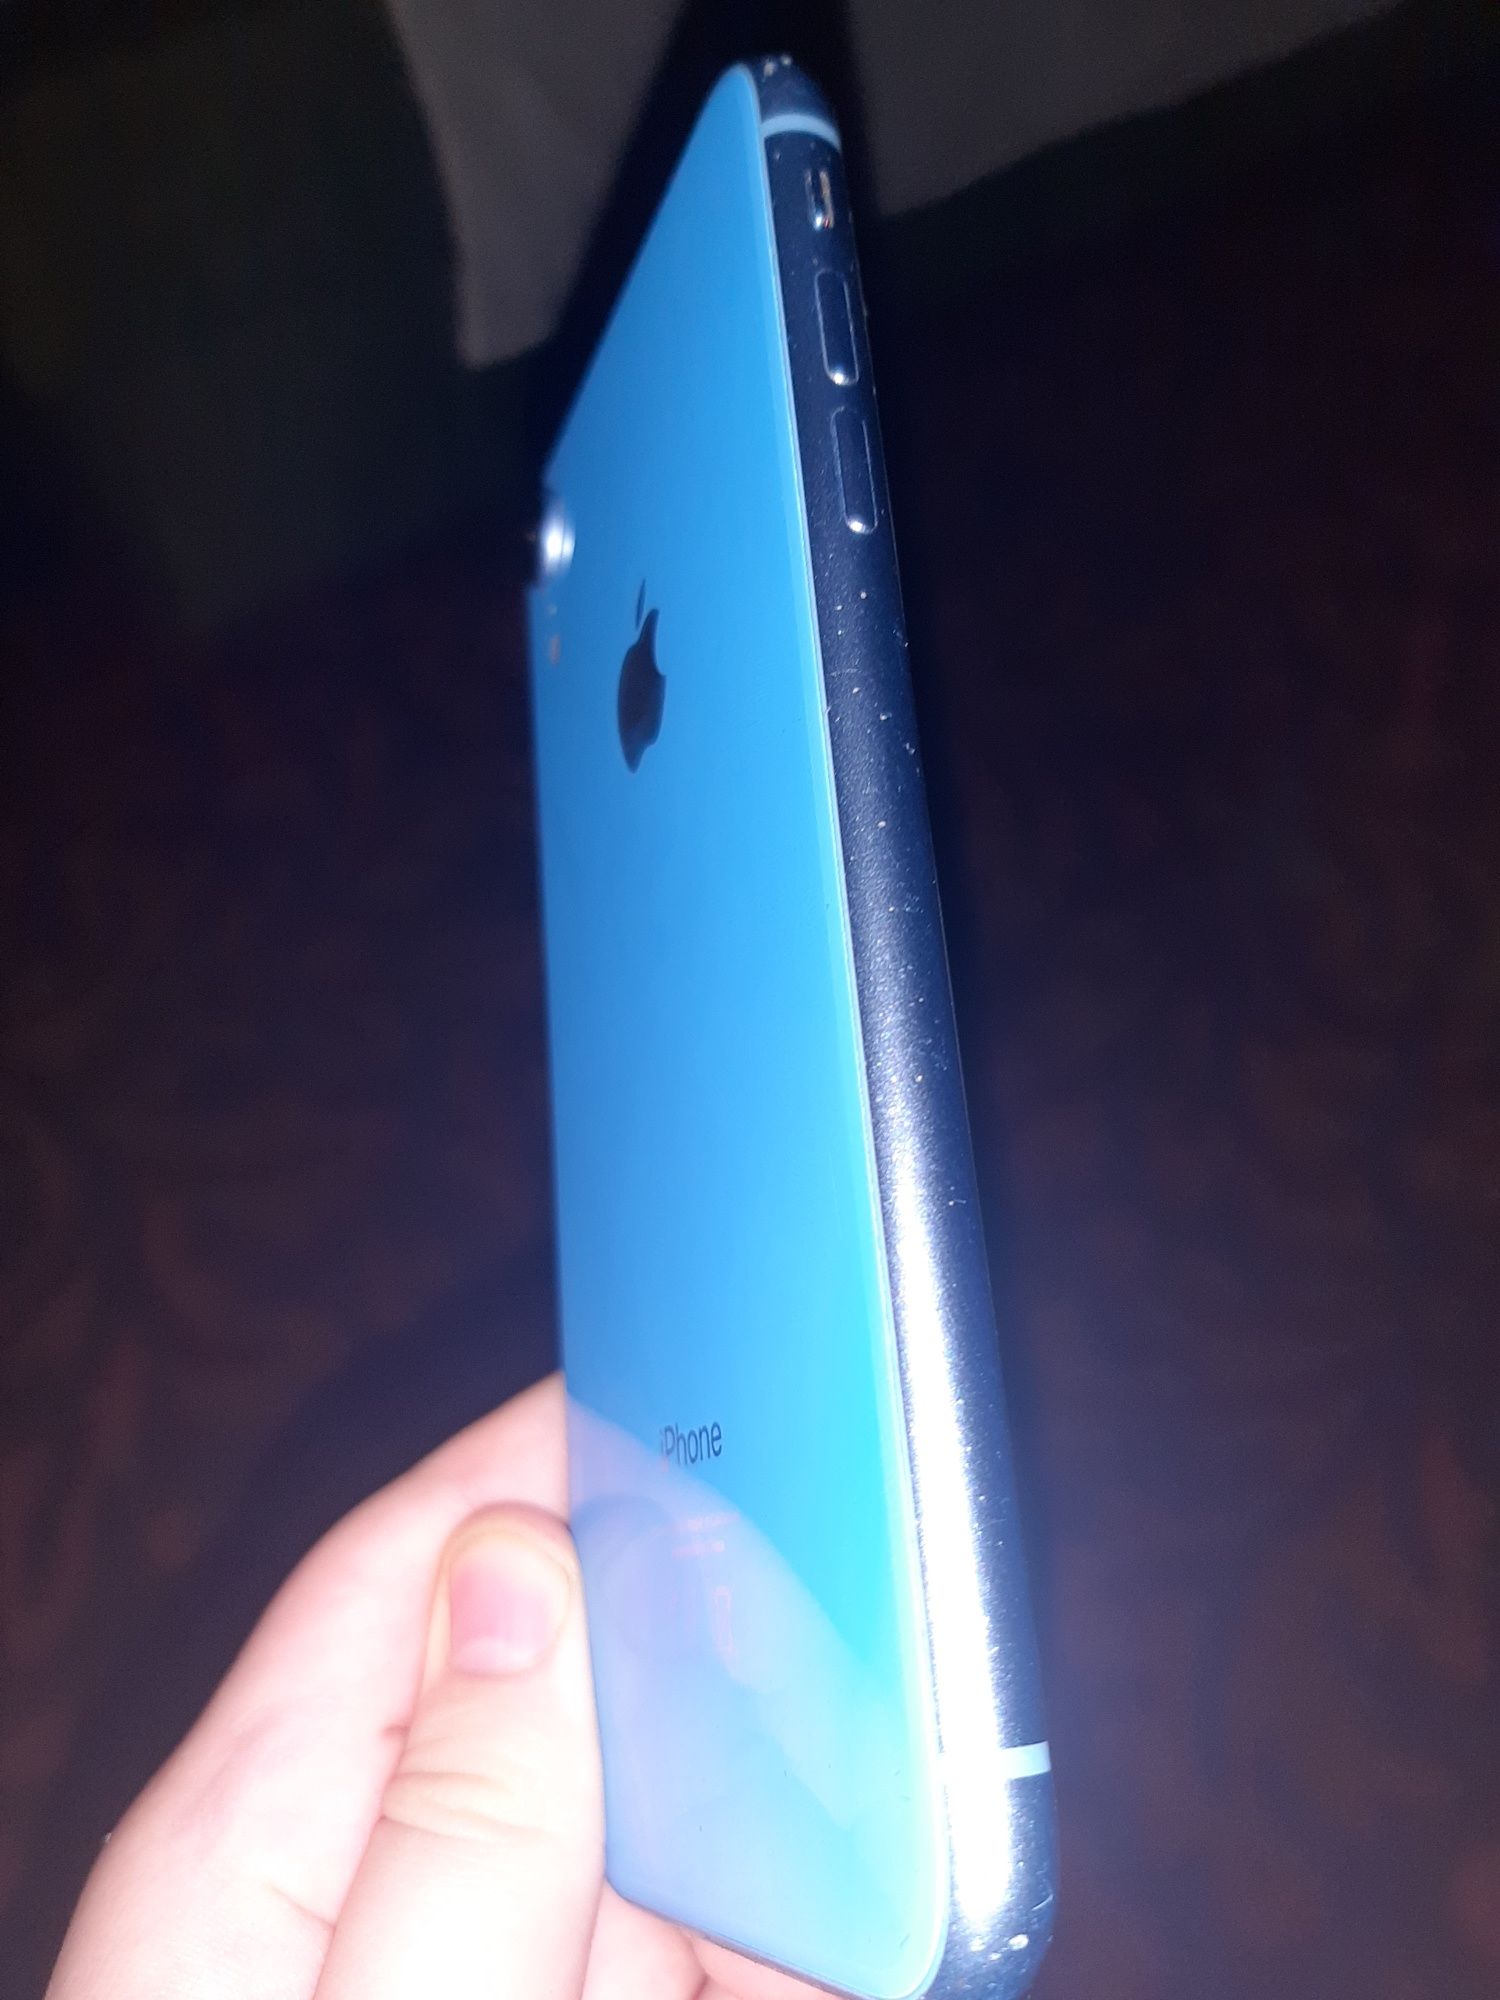 Iphone XR niebieski